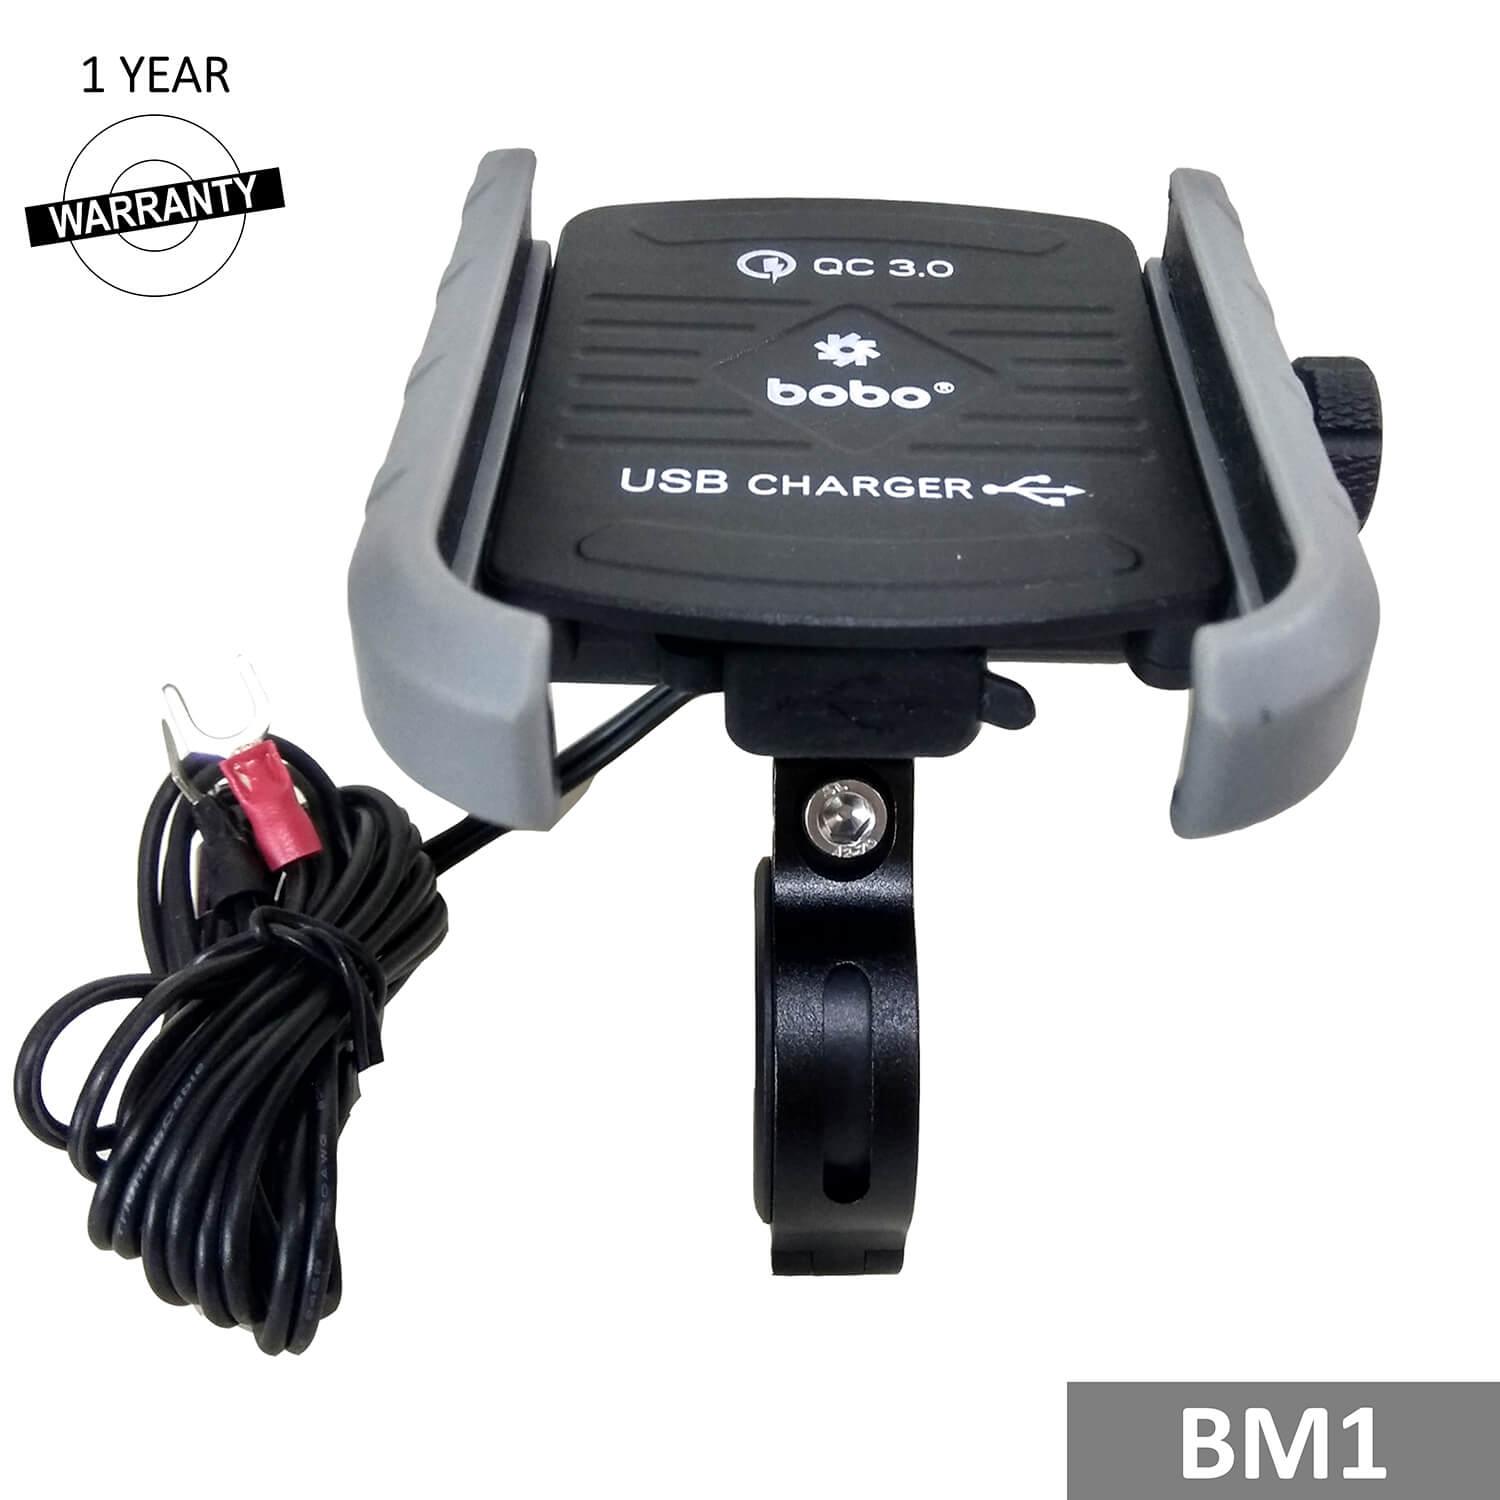 BOBO BM1 Jaw-Grip Bike Phone Holder (with fast USB 3.0 charger) - Autosparz